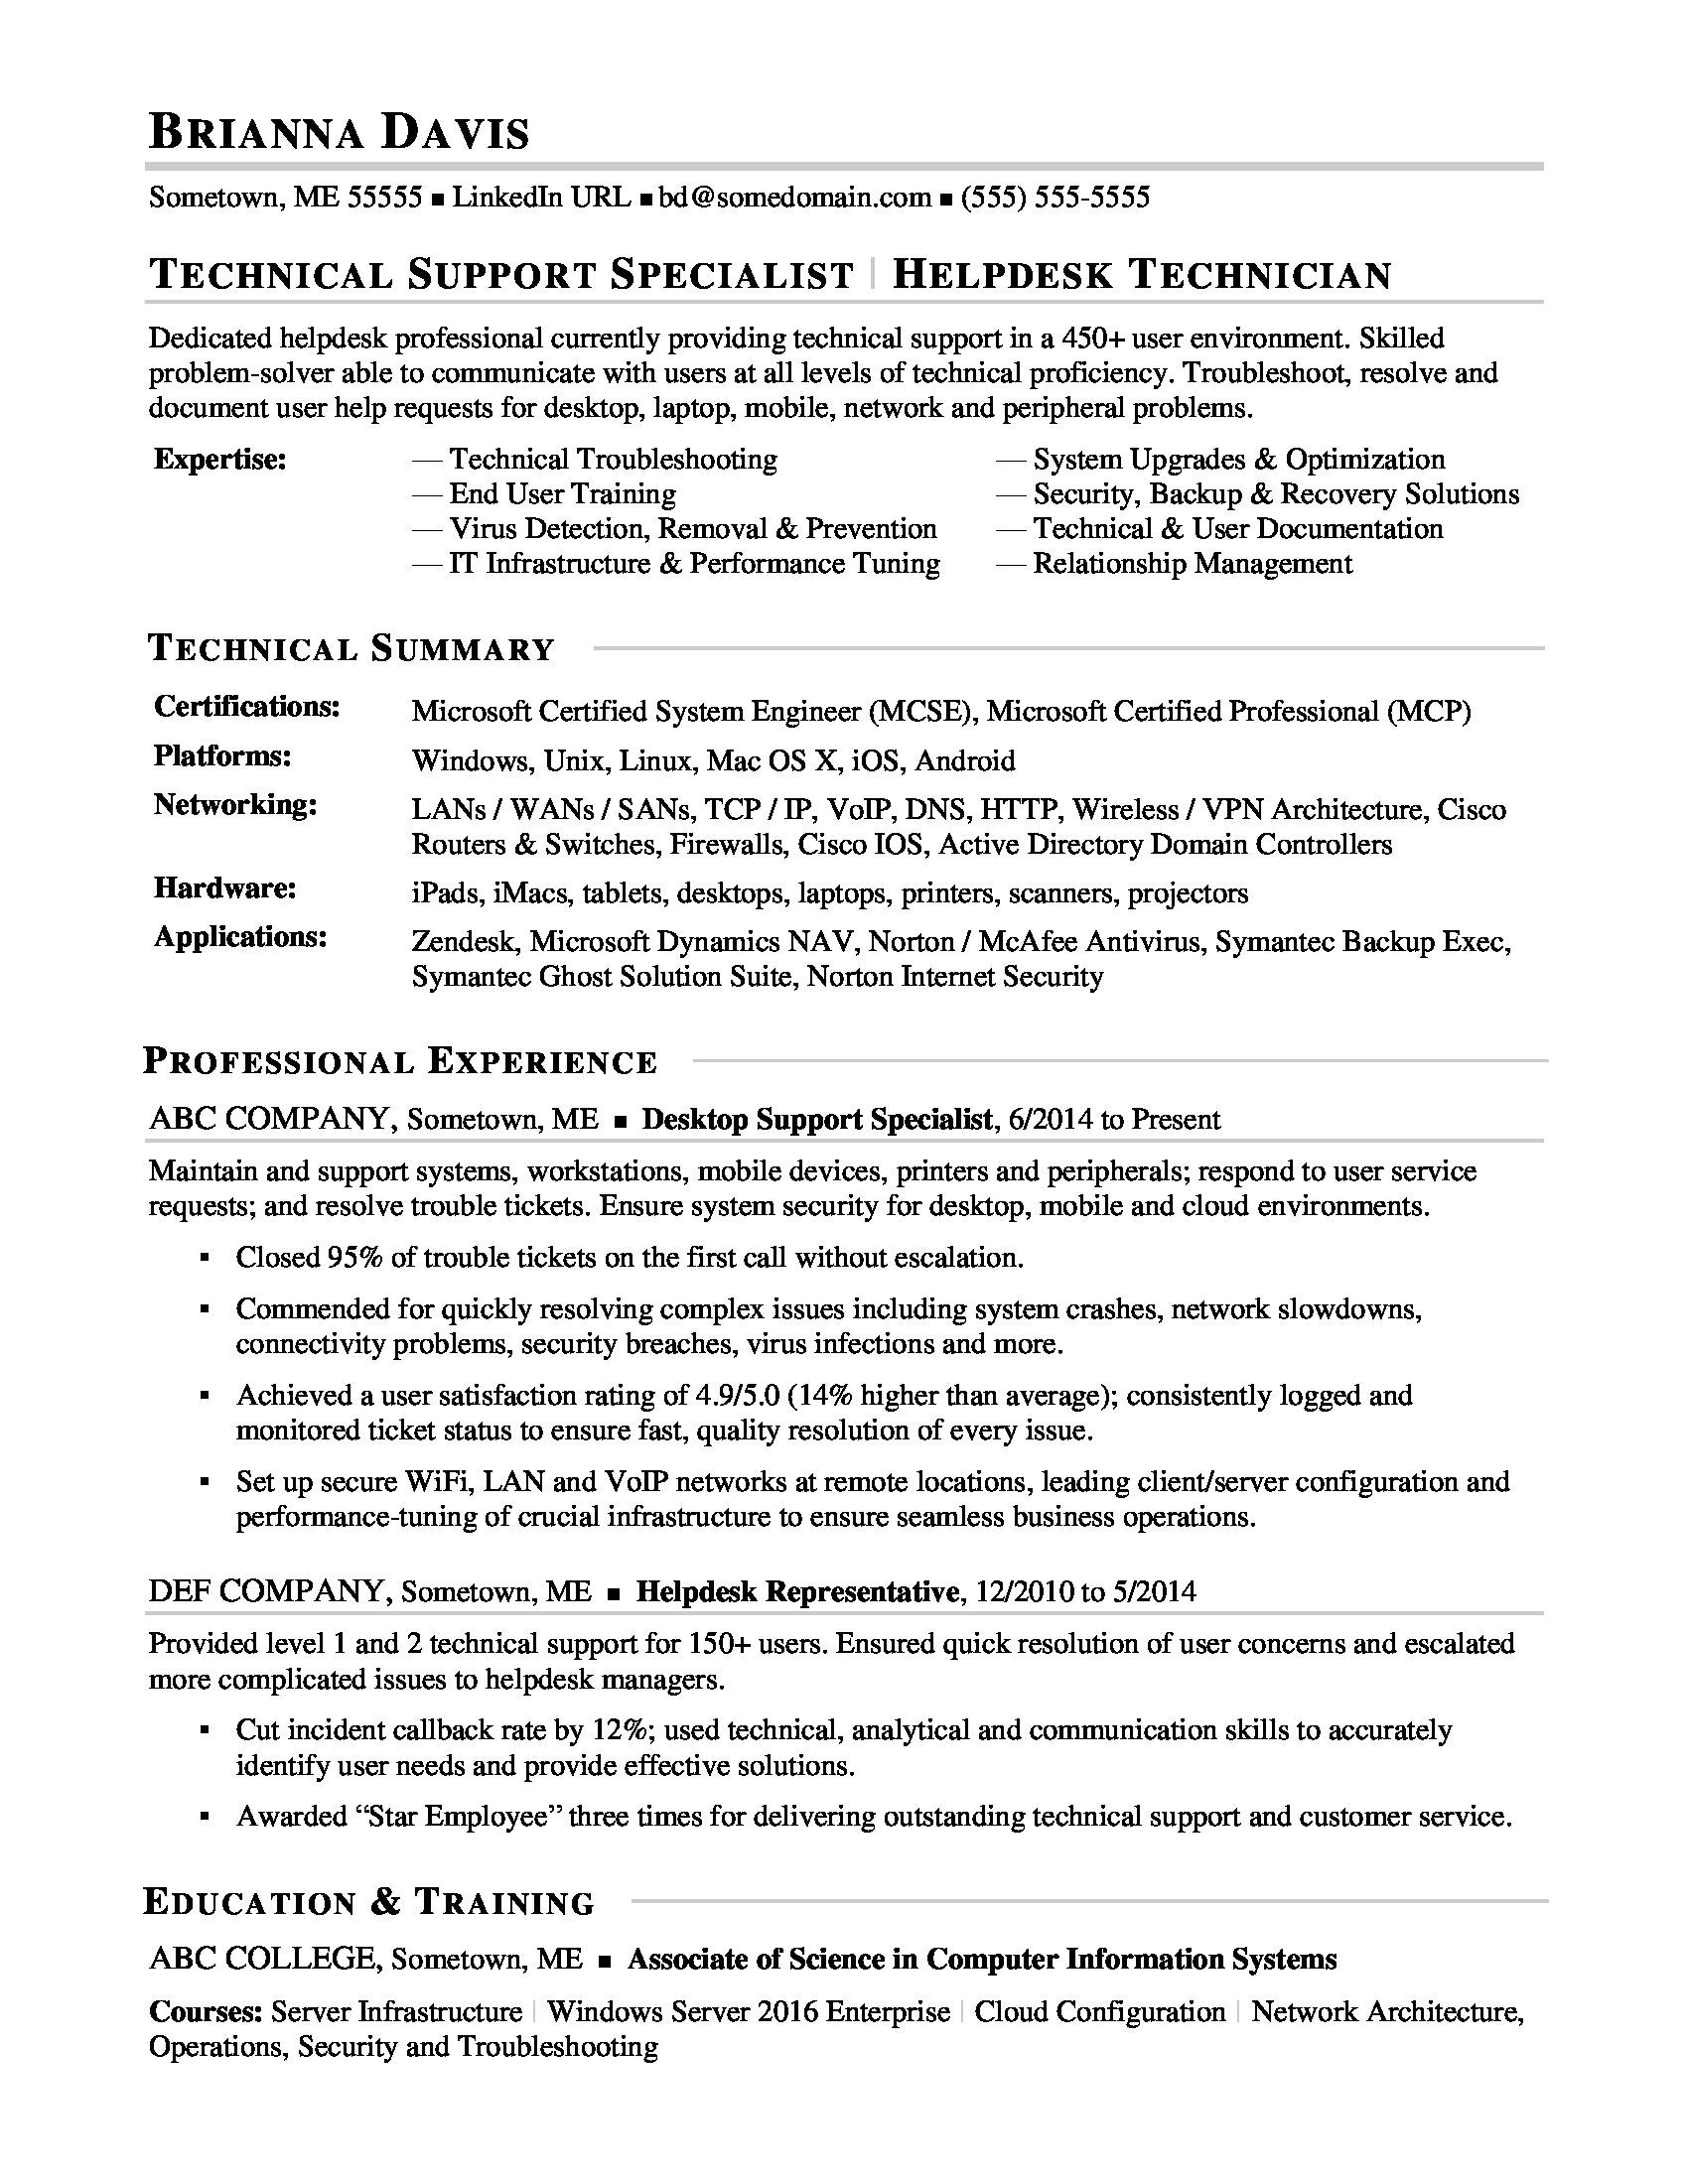 Help Desk Tier 1 Sample Resume Sample Resume for Experienced It Help Desk Employee Monster.com